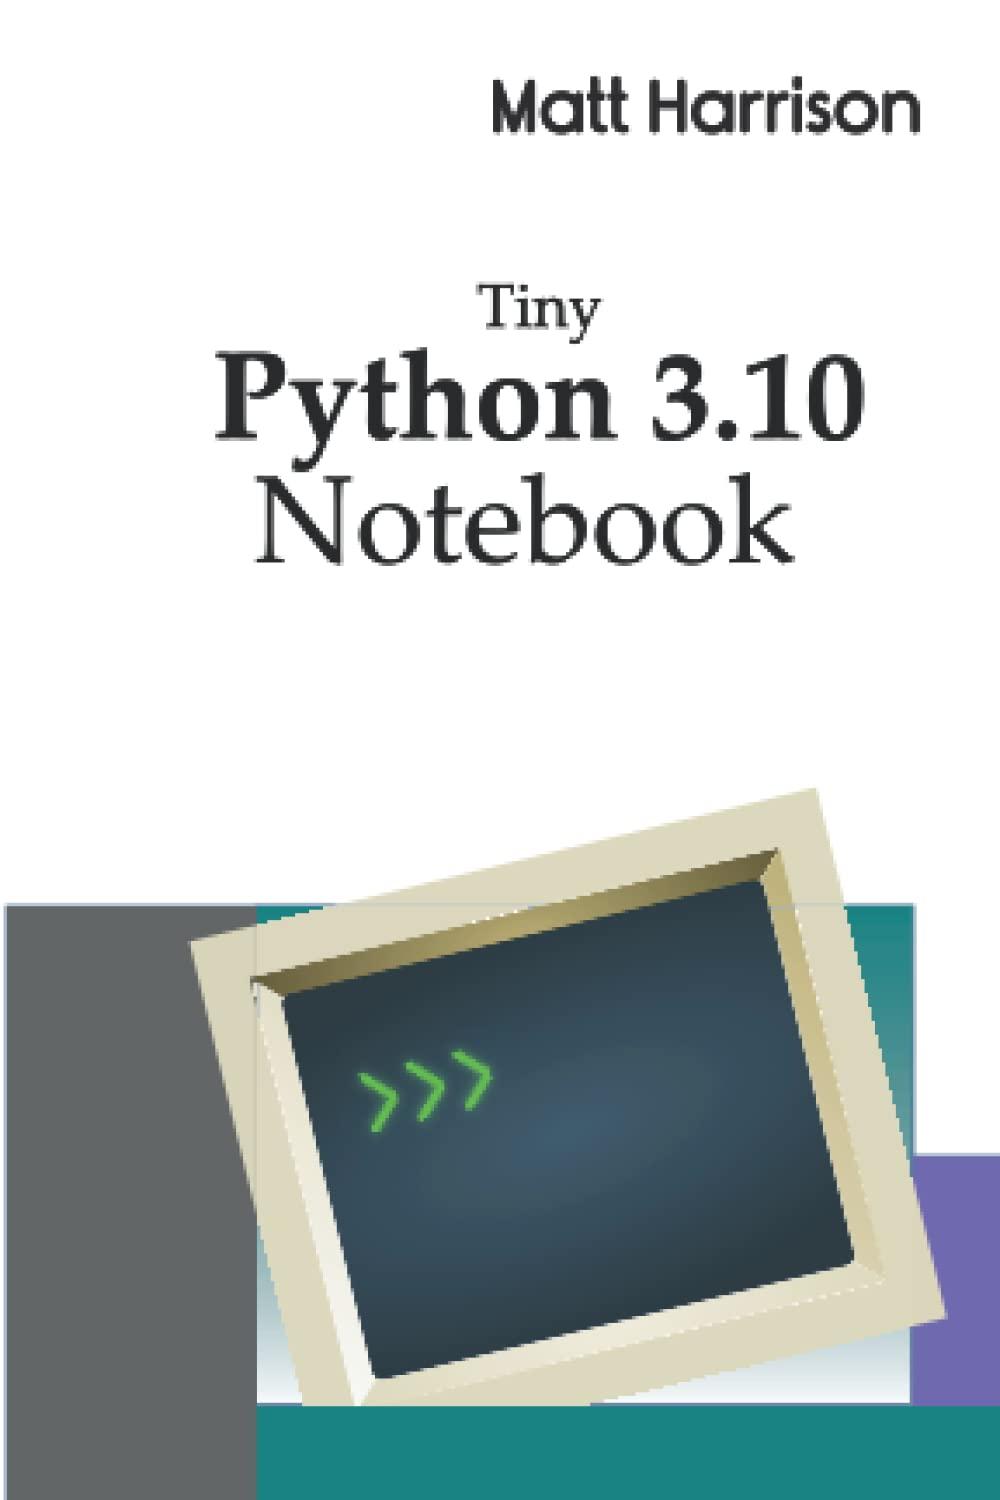 tiny python 3.10 notebook 1st edition matt harrison b09m4r6rv1, 979-8771873640